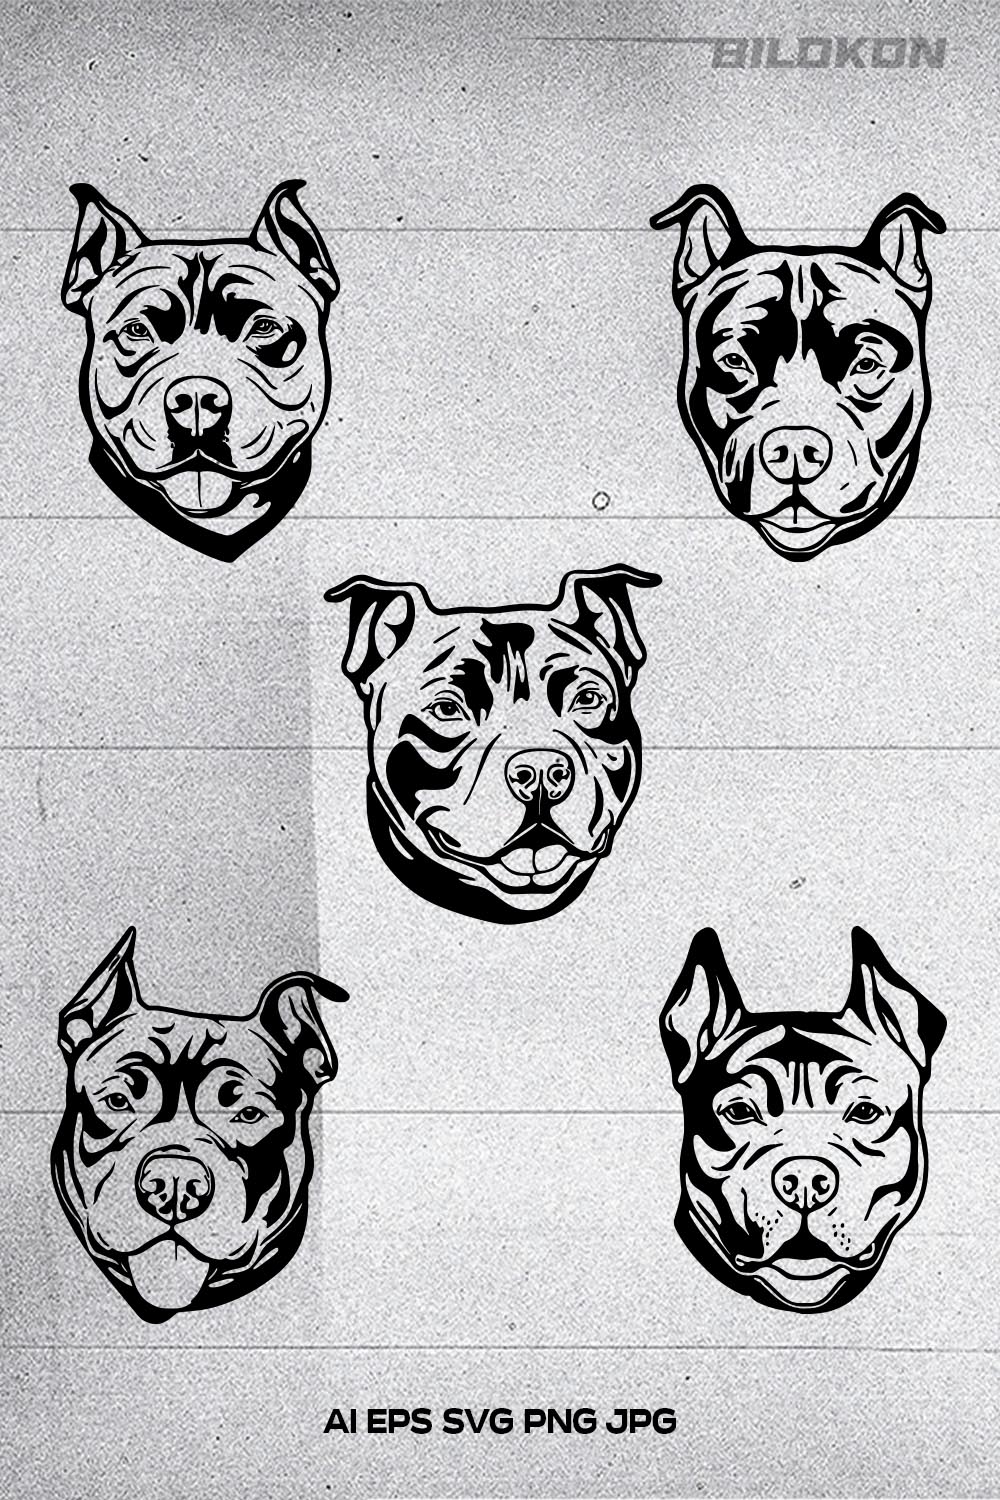 Pitbull dog face, SVG, Vector, Illustration pinterest preview image.